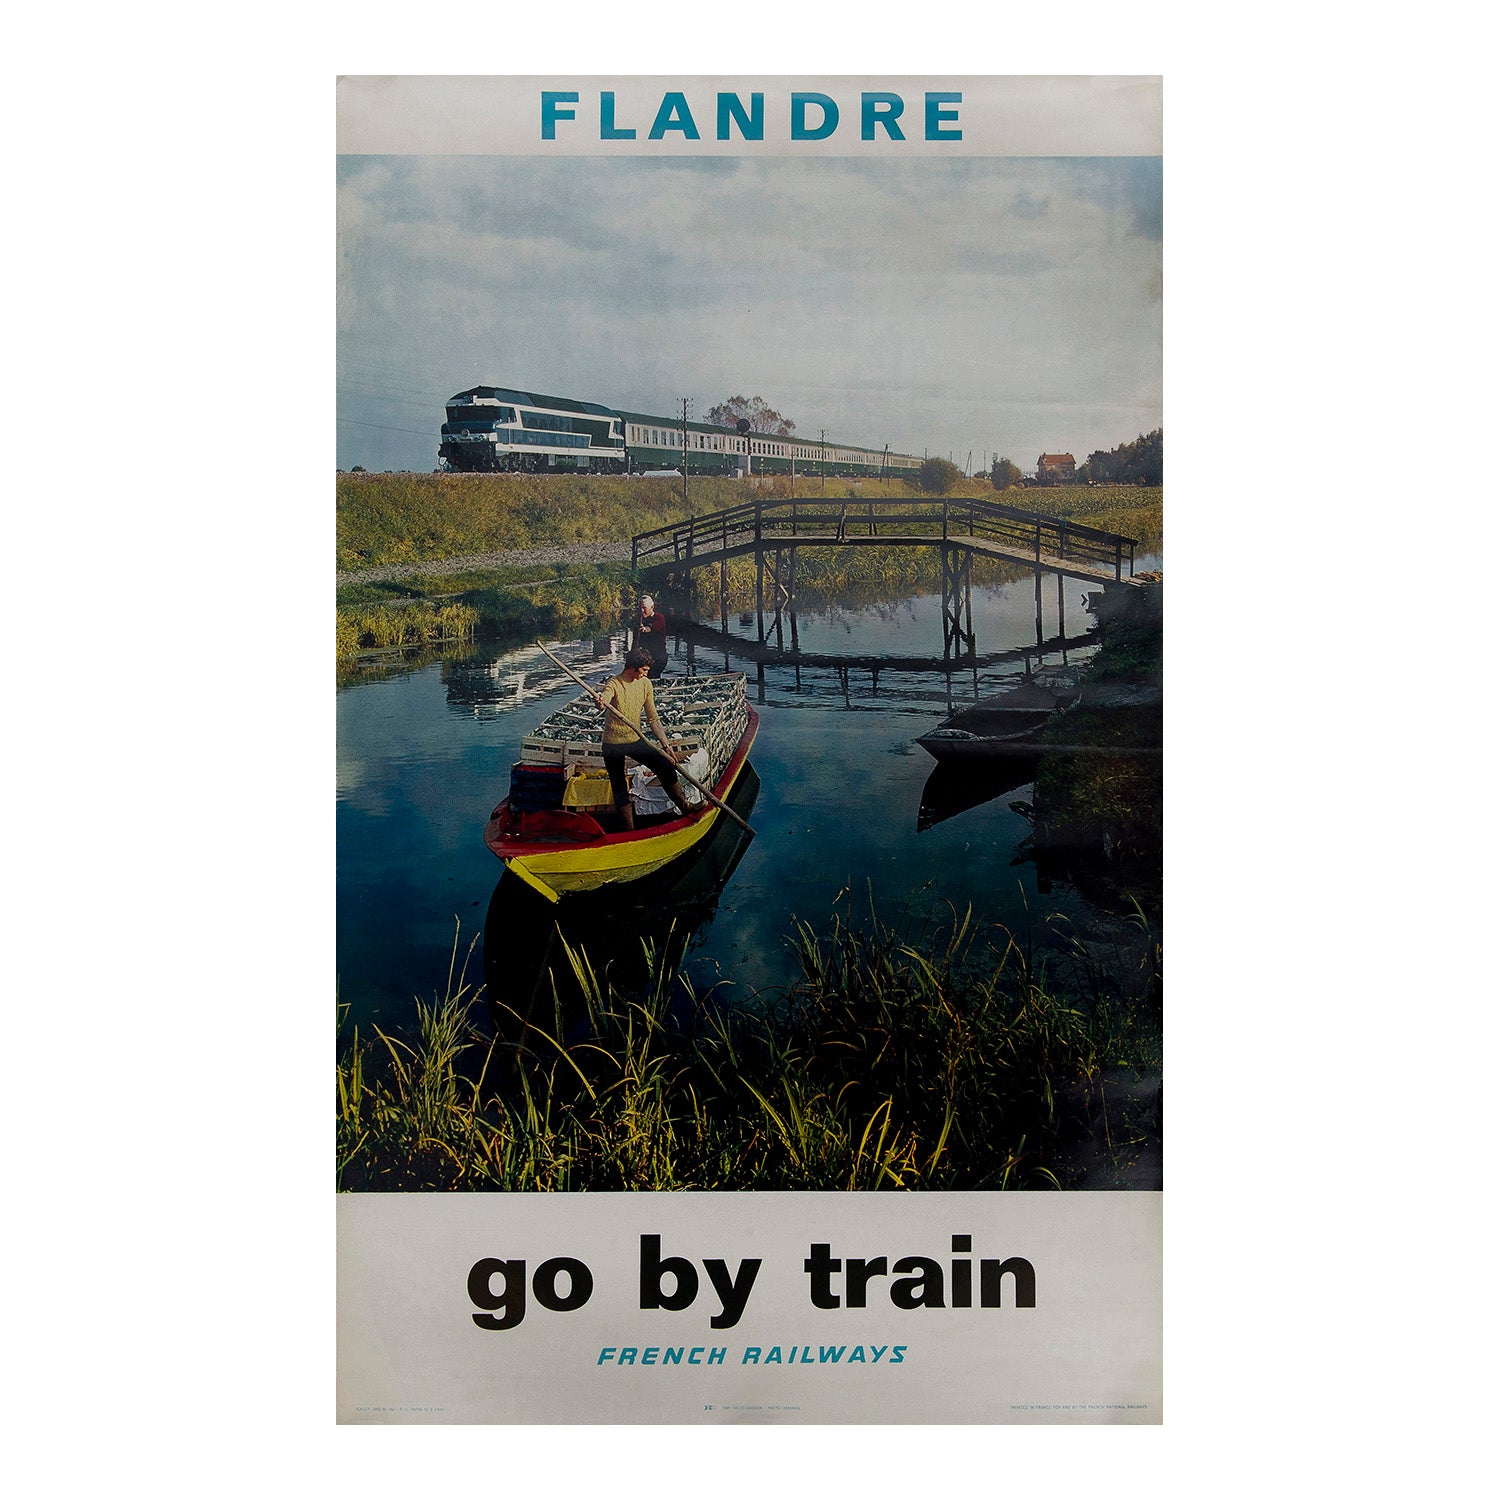 Flandre. Go by train. French Railways